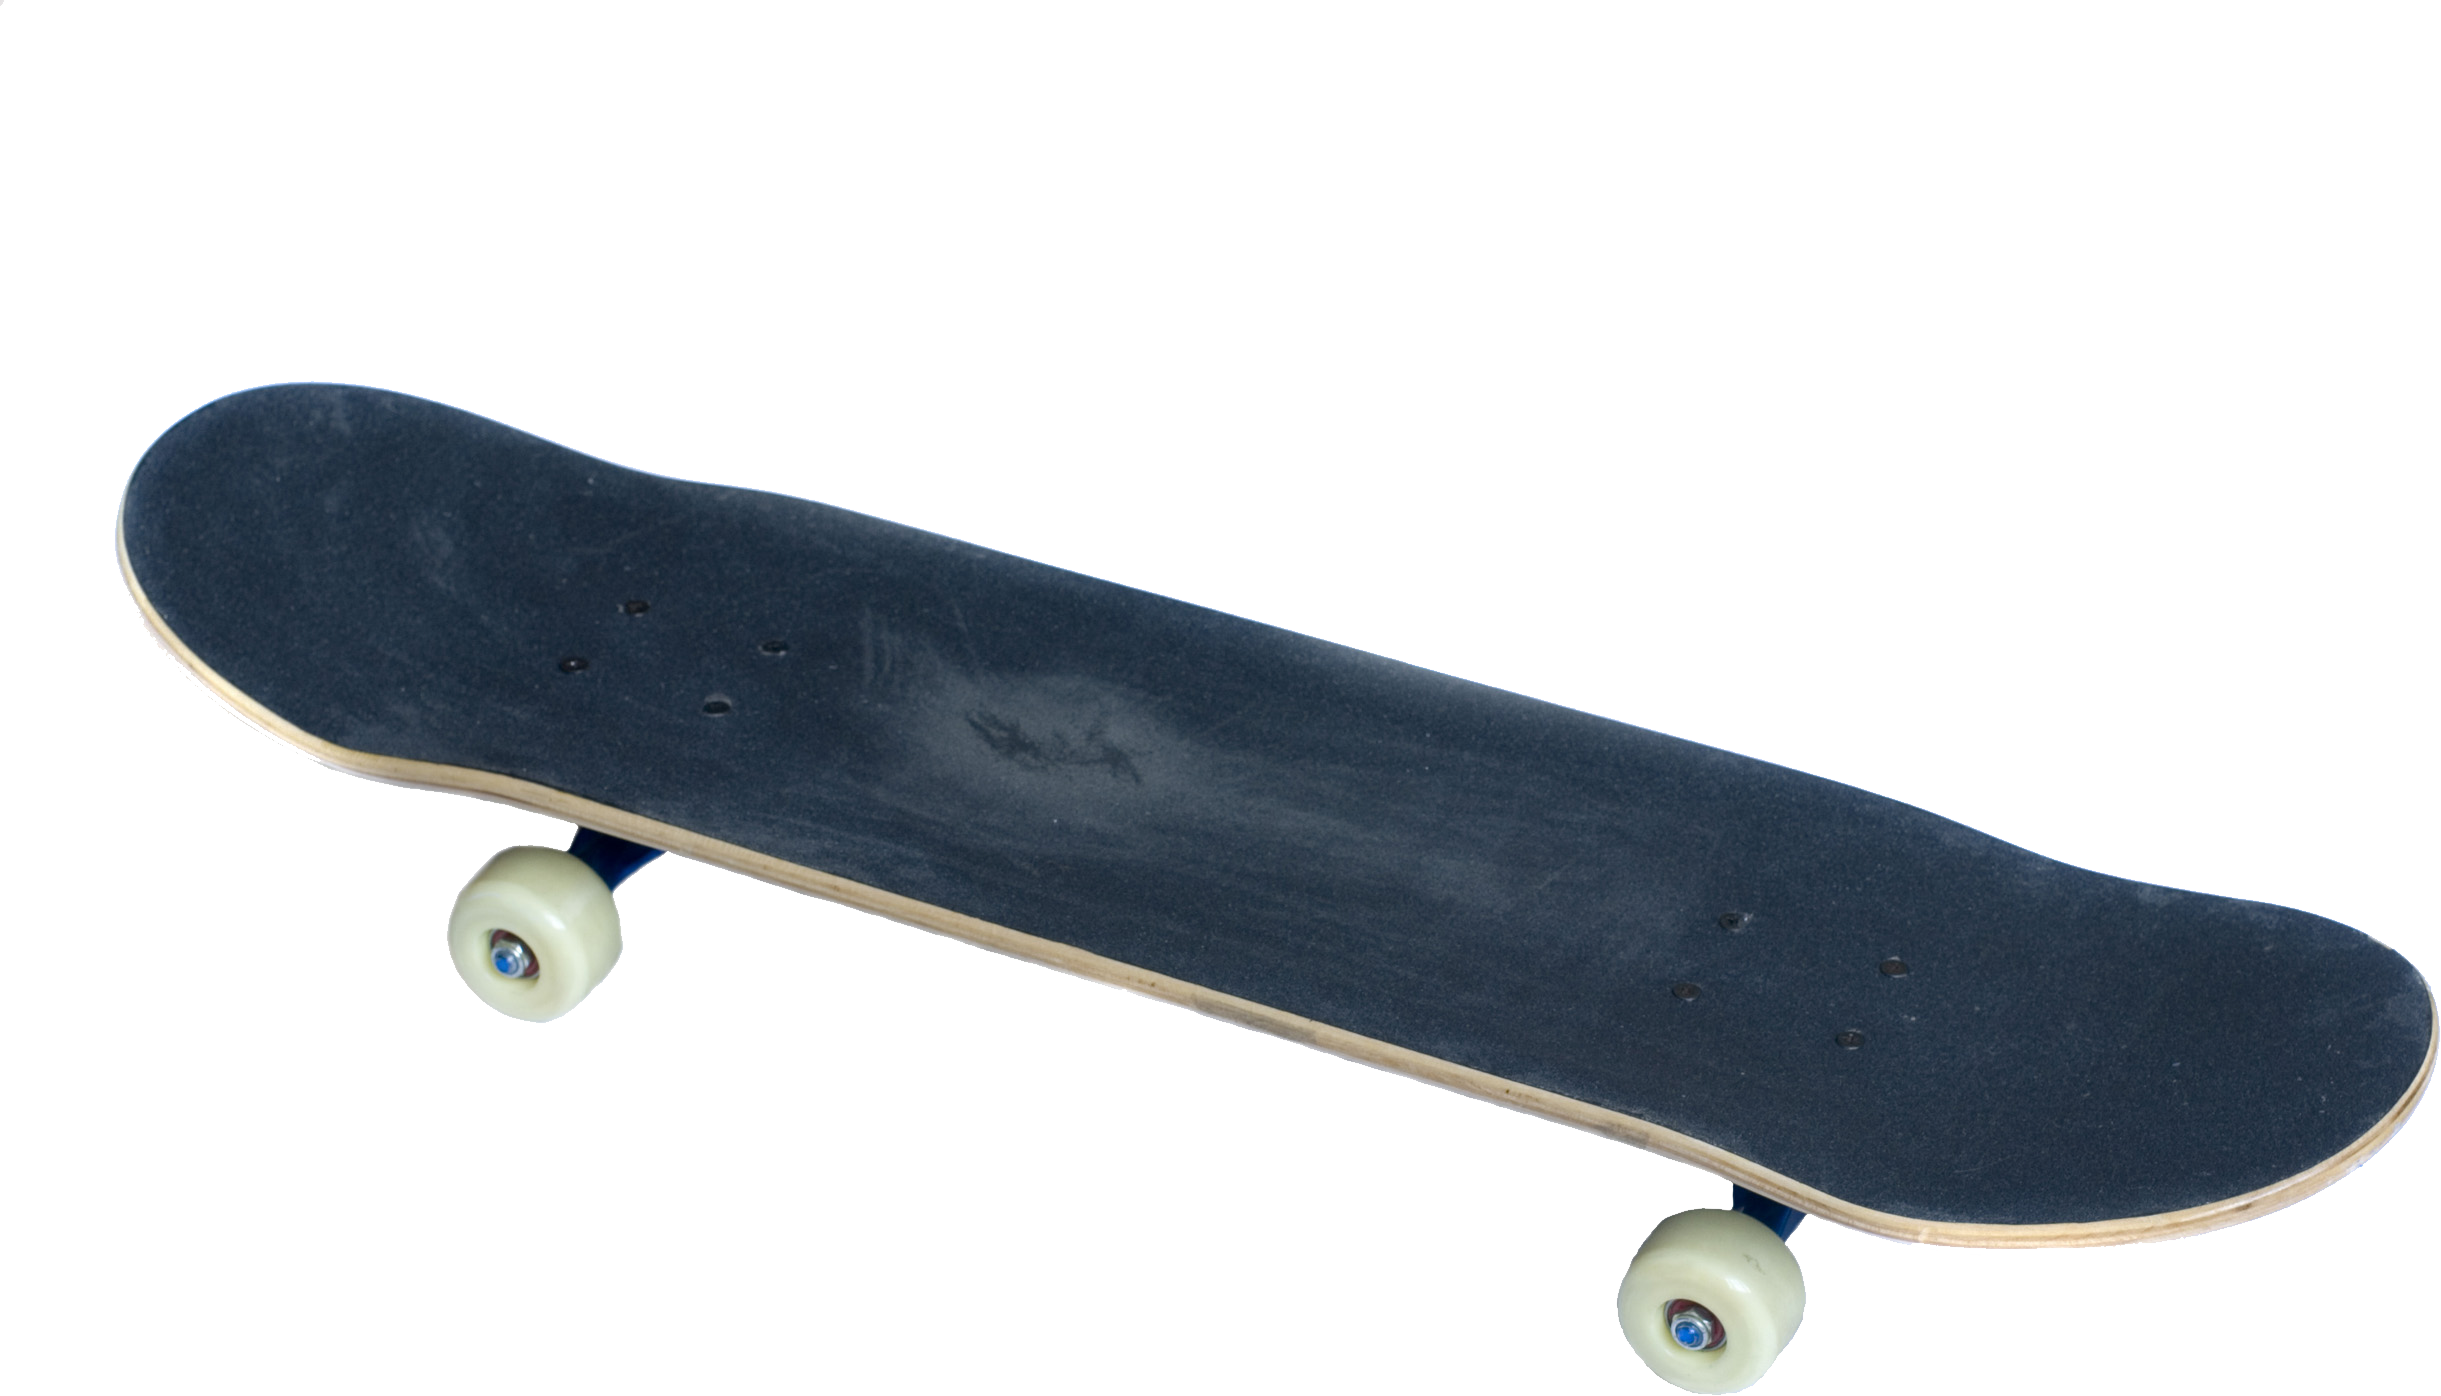 Skateboard Png Image Transparent Image Download Size 2441x1396px